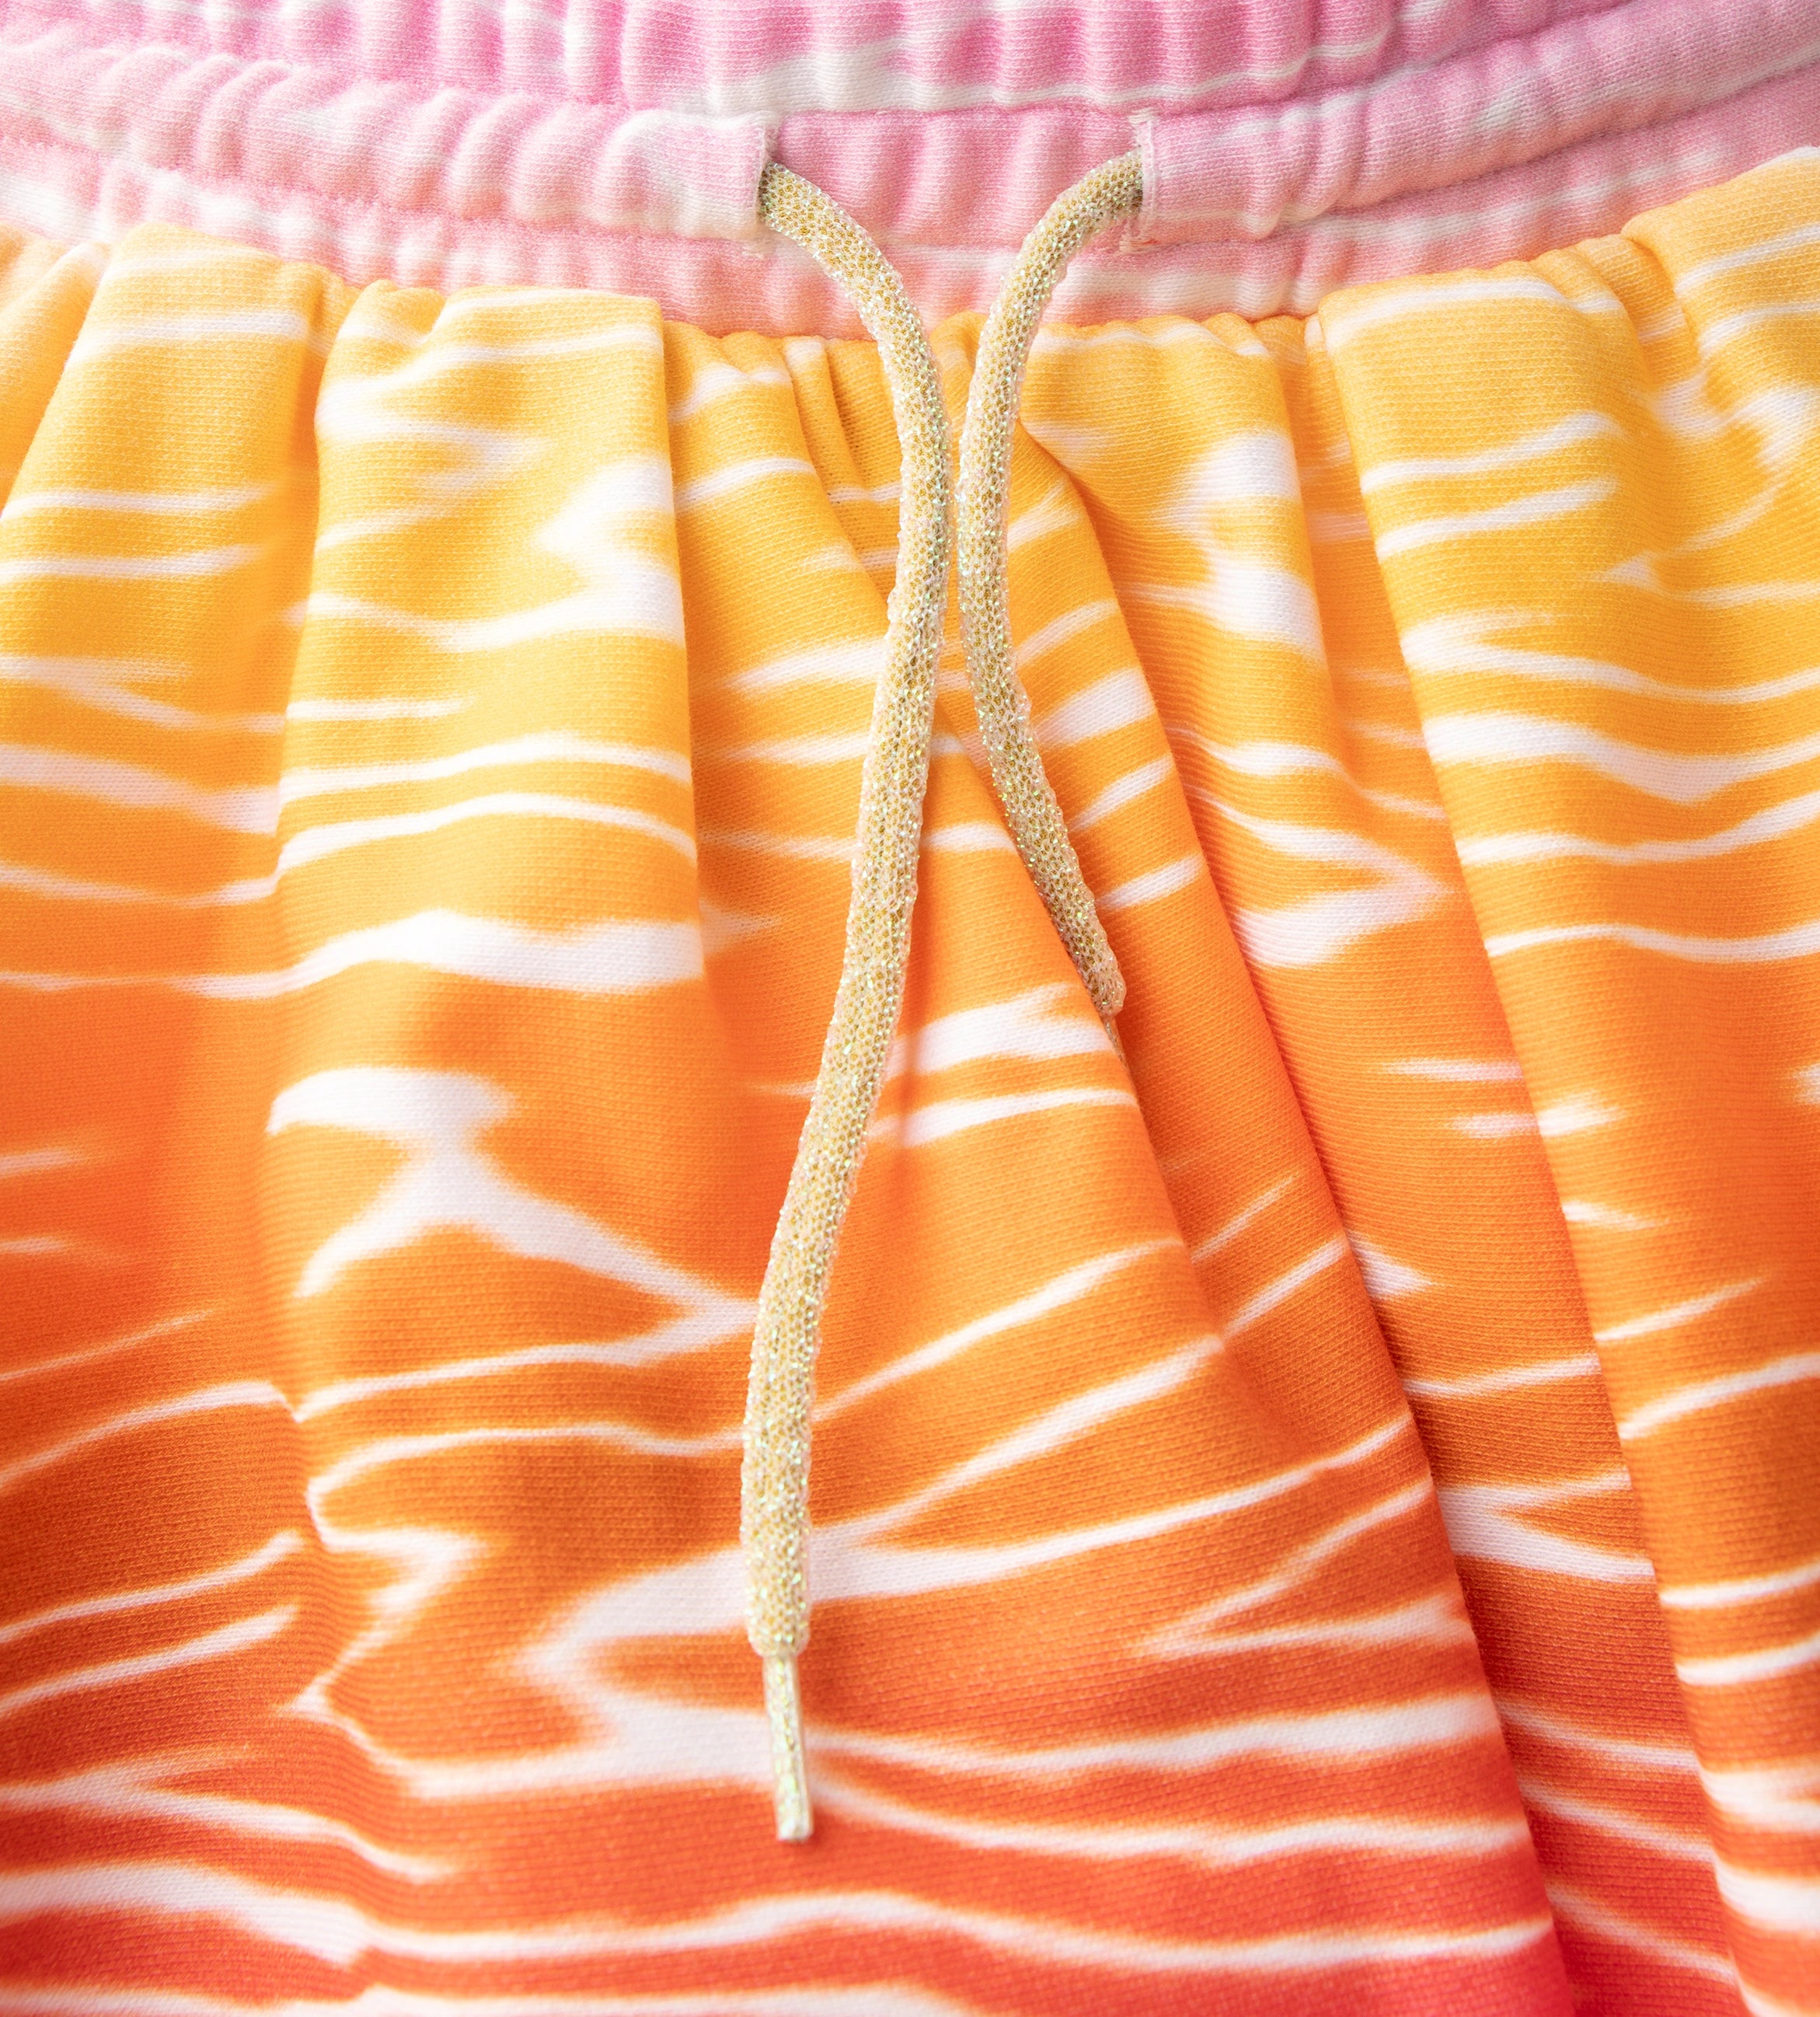 Skirt with Drawstring Multi